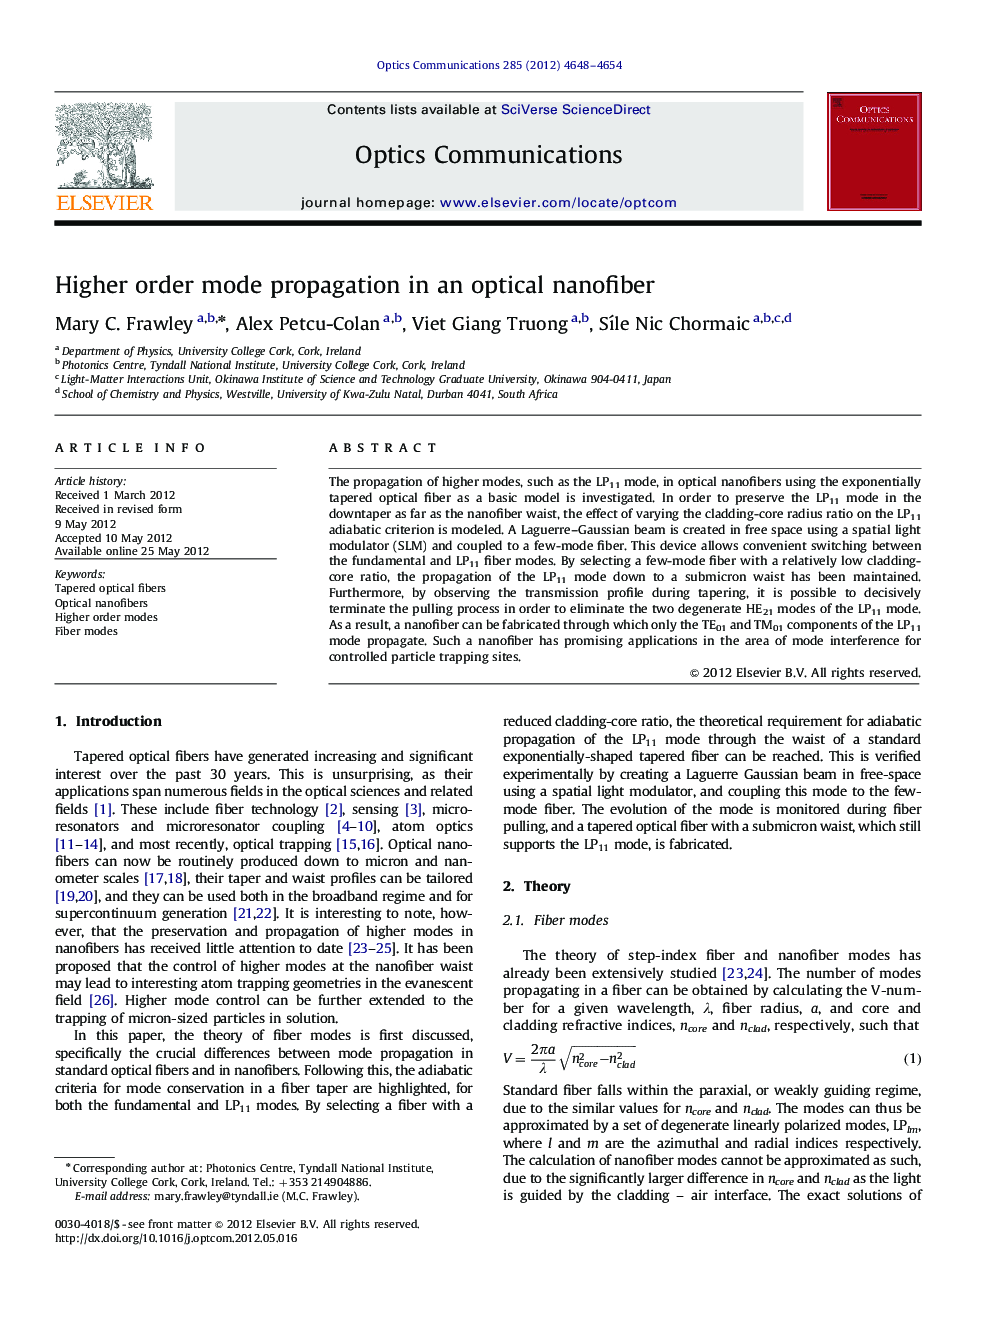 Higher order mode propagation in an optical nanofiber